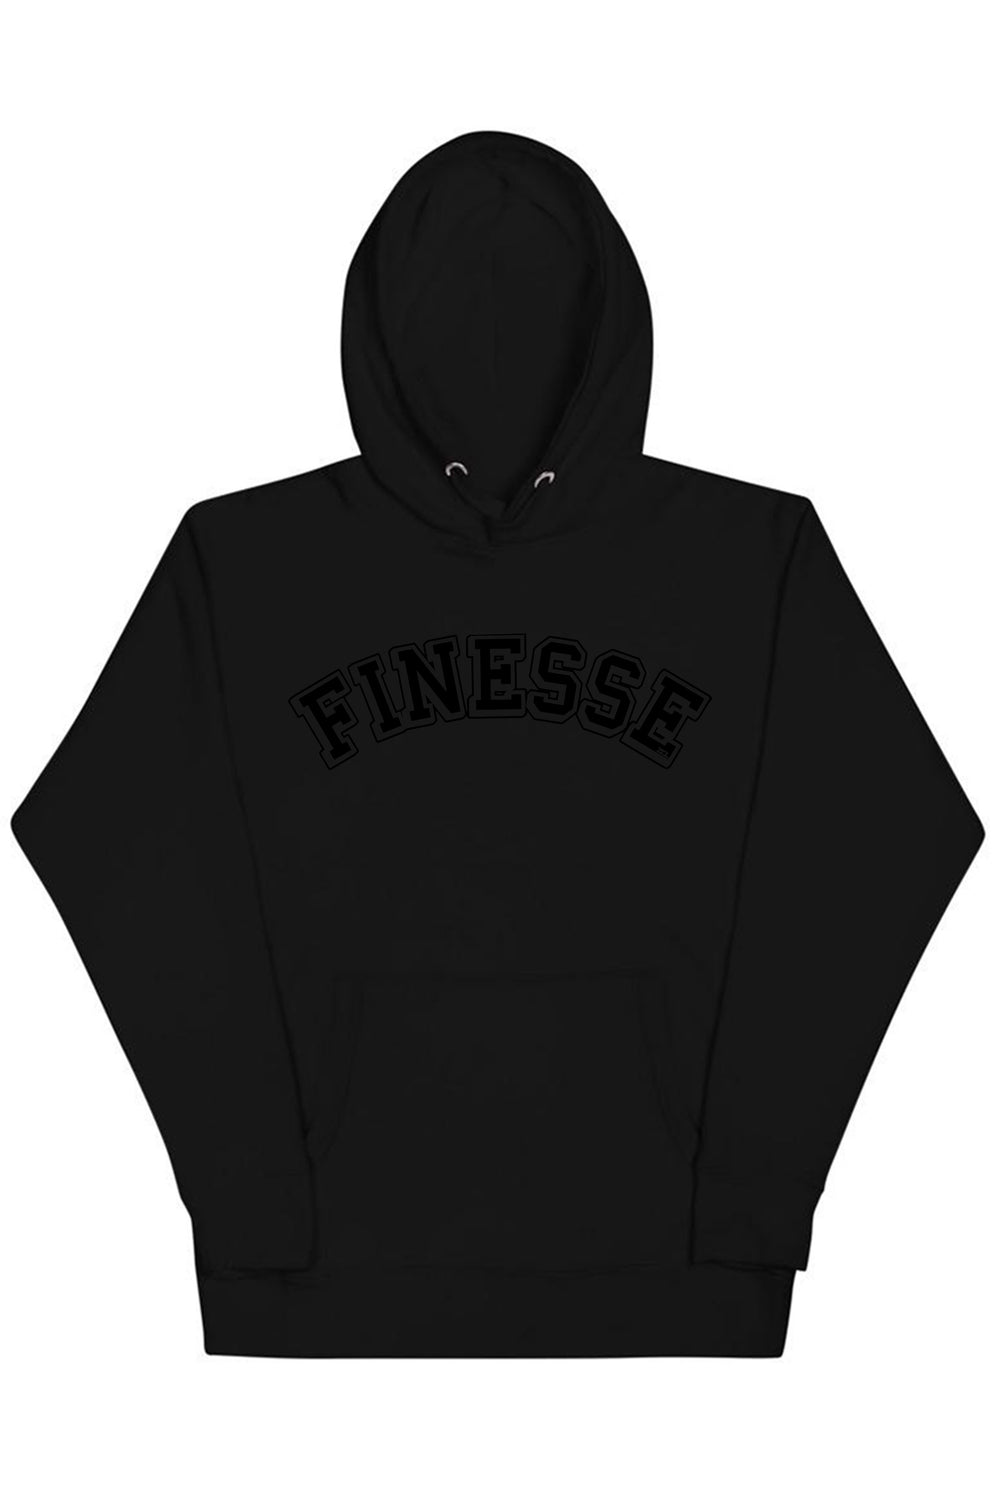 Finesse Hoodie (Black Logo) - Zamage